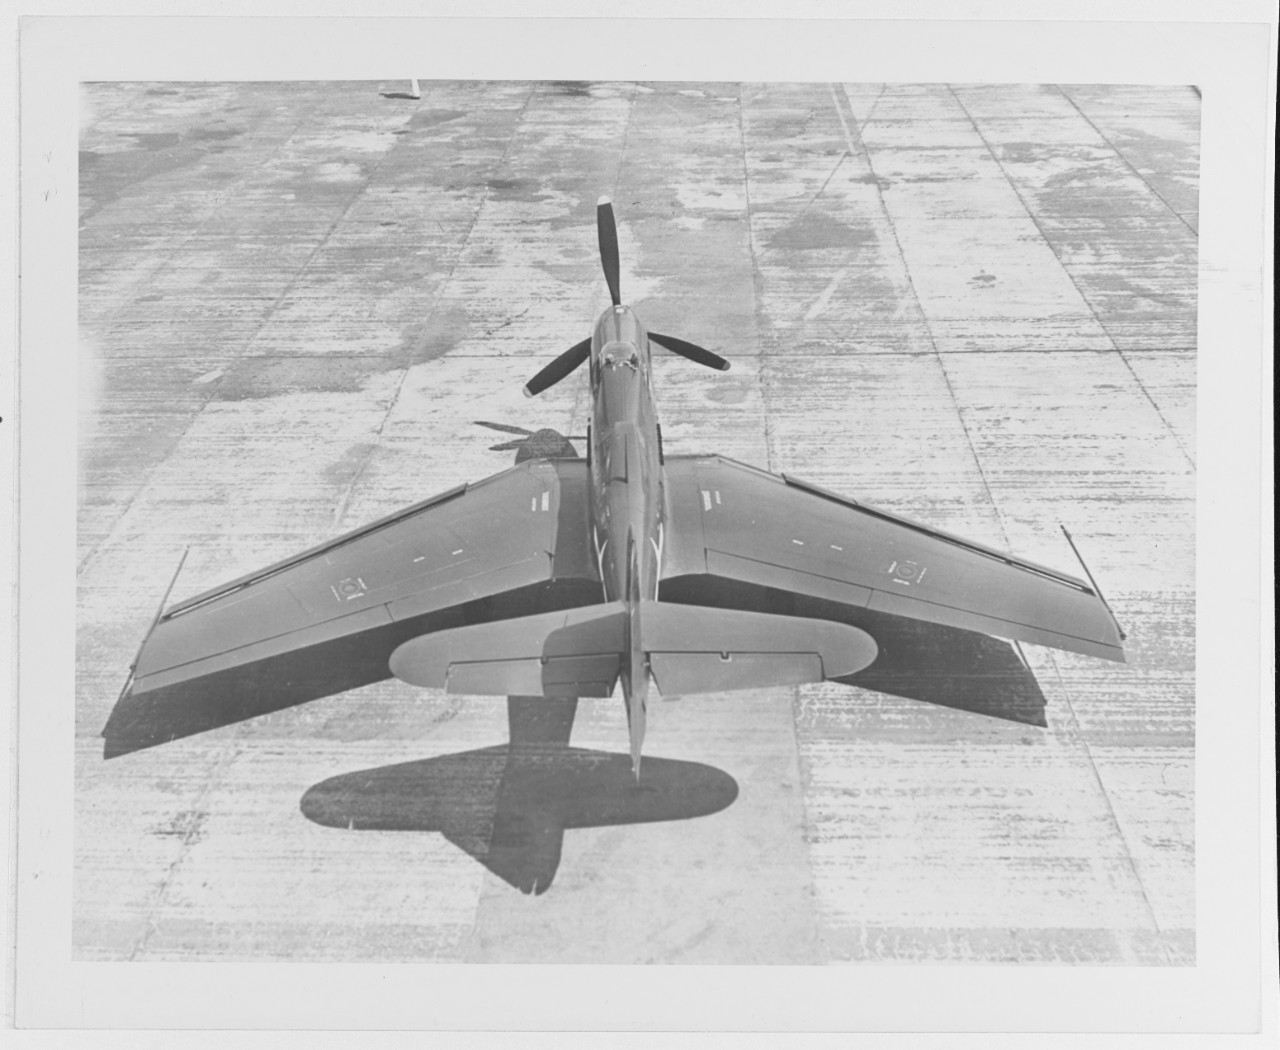 Bell P-63 "Kingcobra," grounded